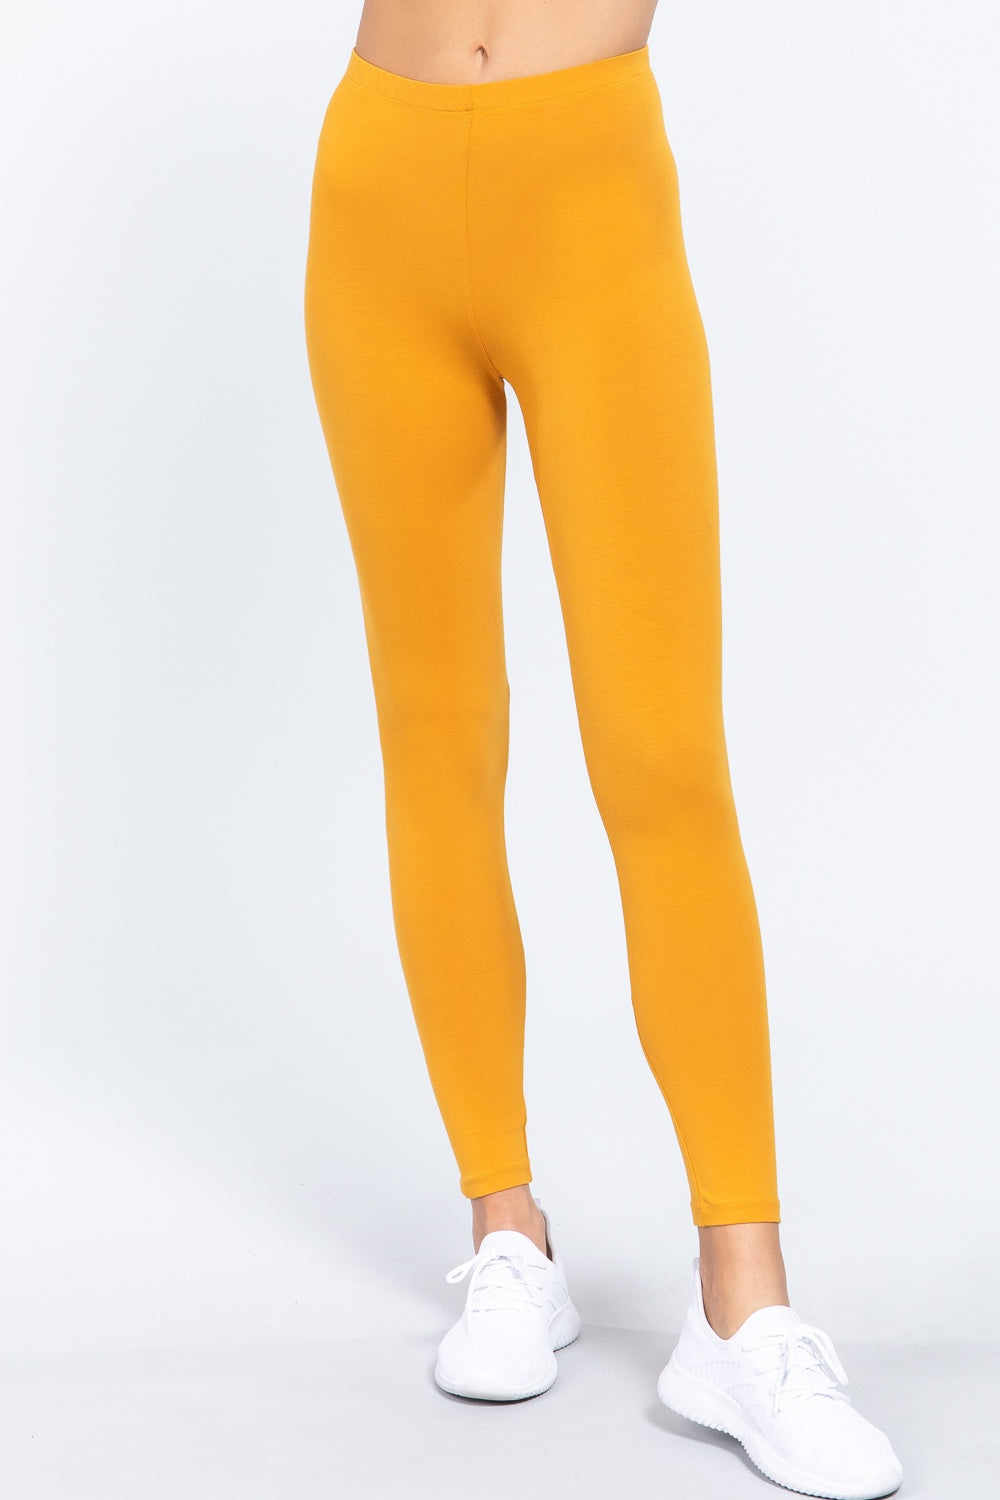 Cotton Spandex Jersey Long - Mustard / S Pants Girl Code